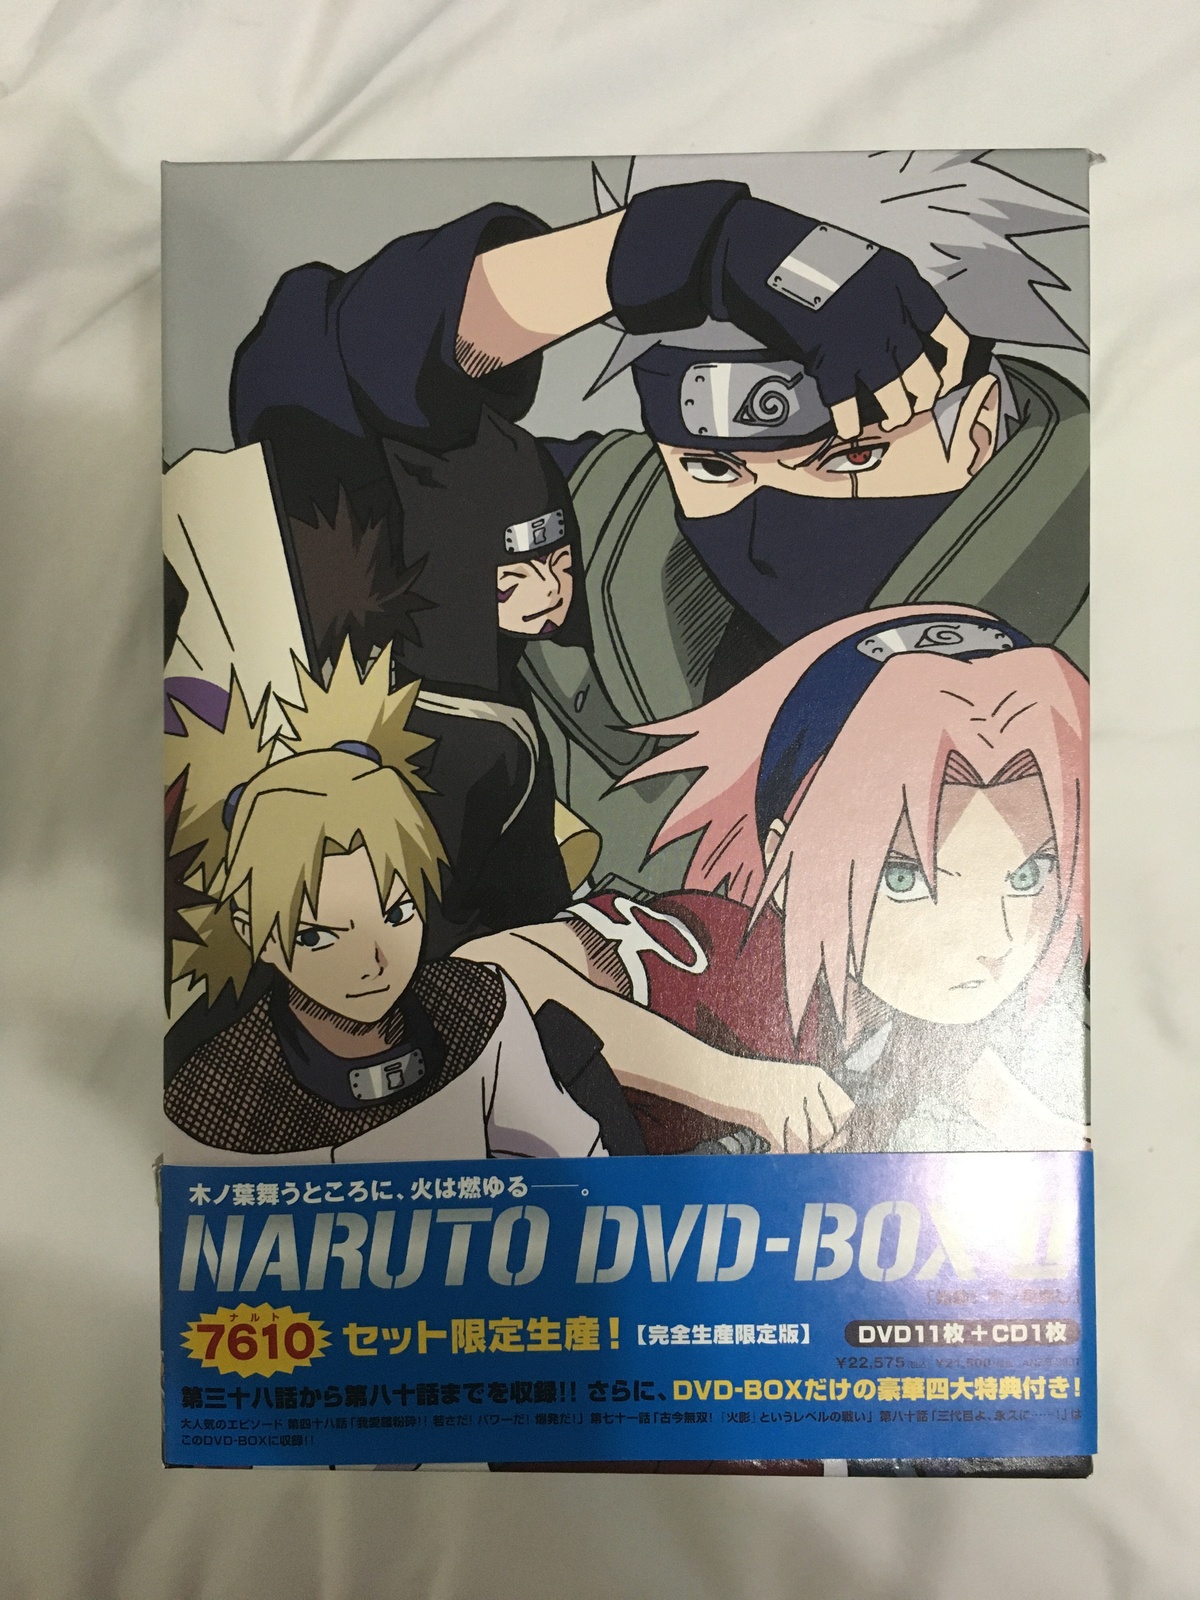 Naruto DVD Box II [Limited Release] - Japanese Region 2